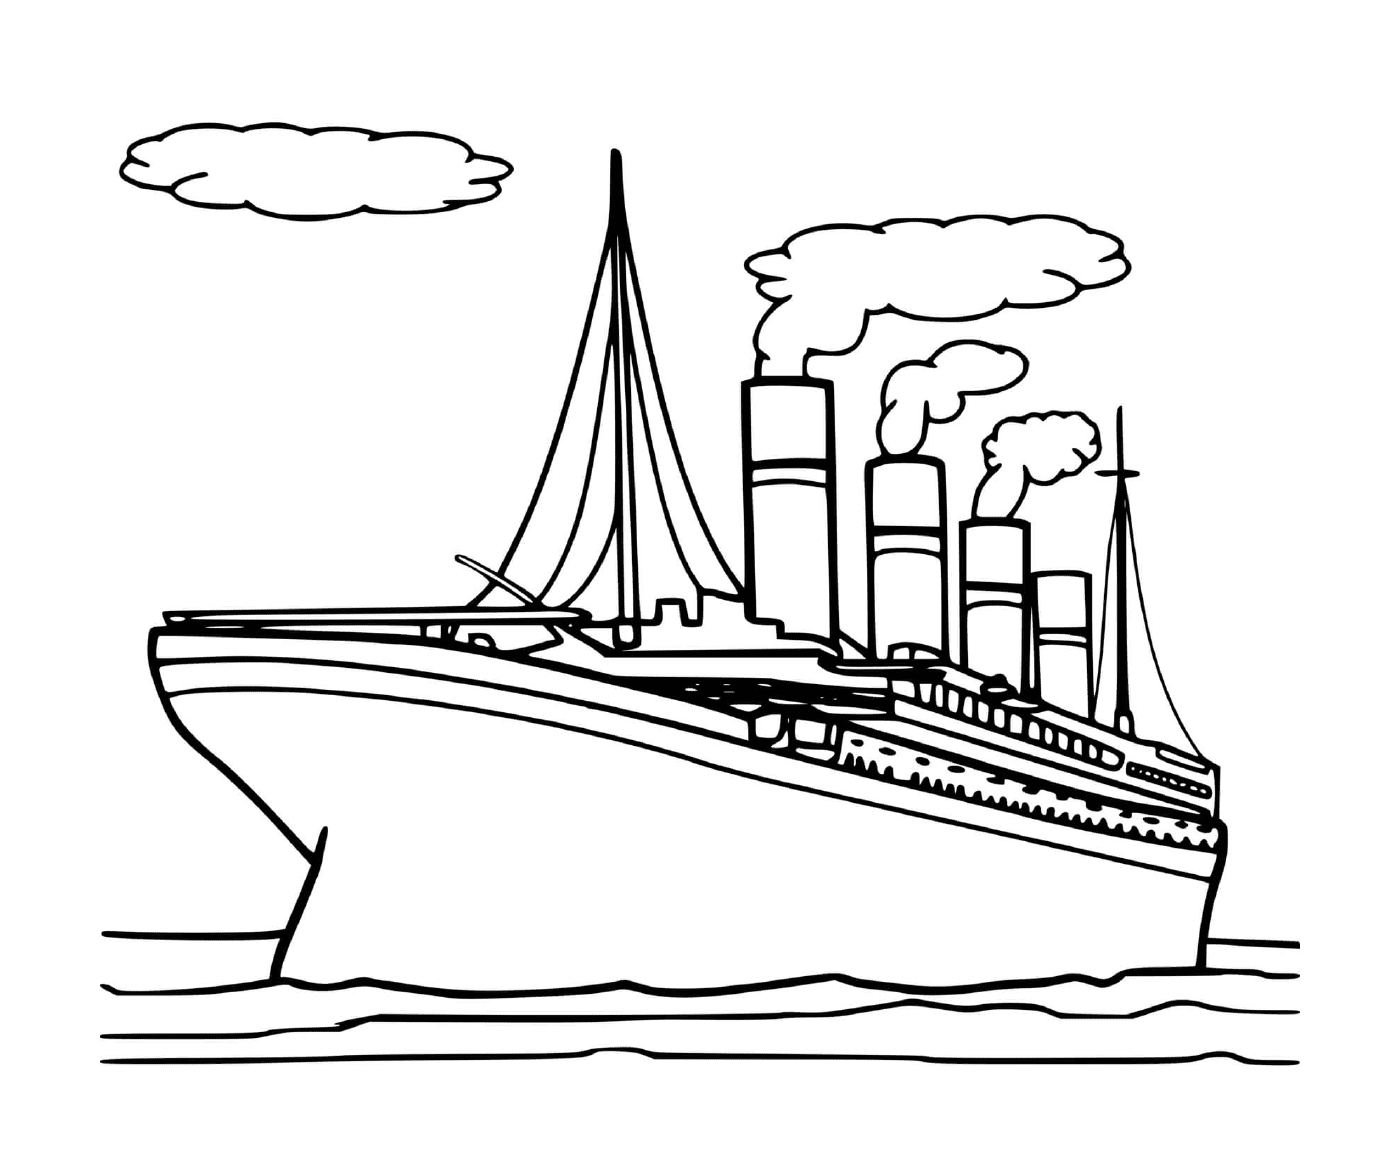  O barco Titanic 